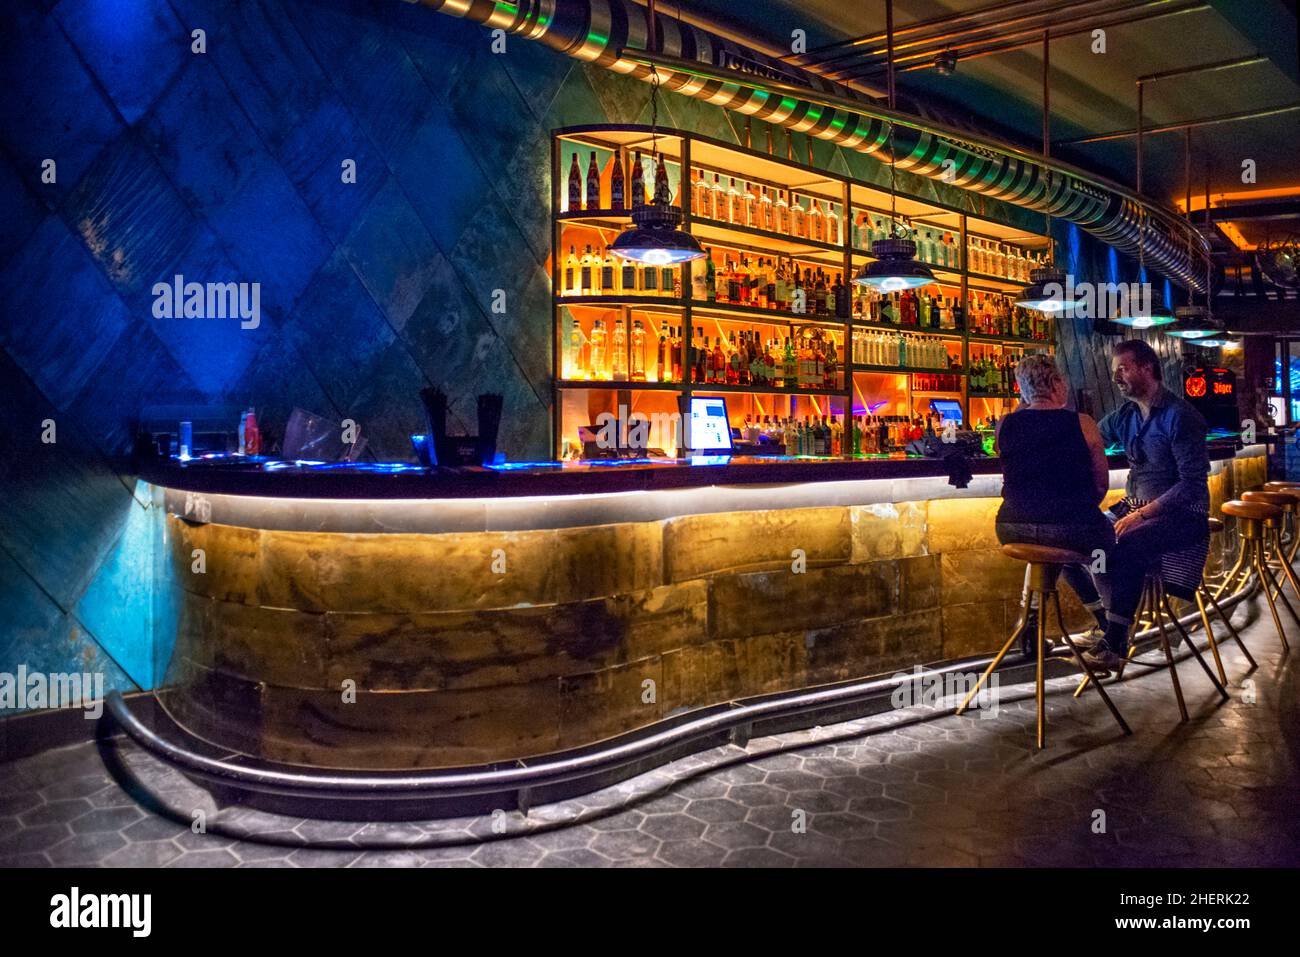 The monkey piper pub steampunk bar nightlife in Santa Cruz district Seville Antalusia Spain Stock Photo